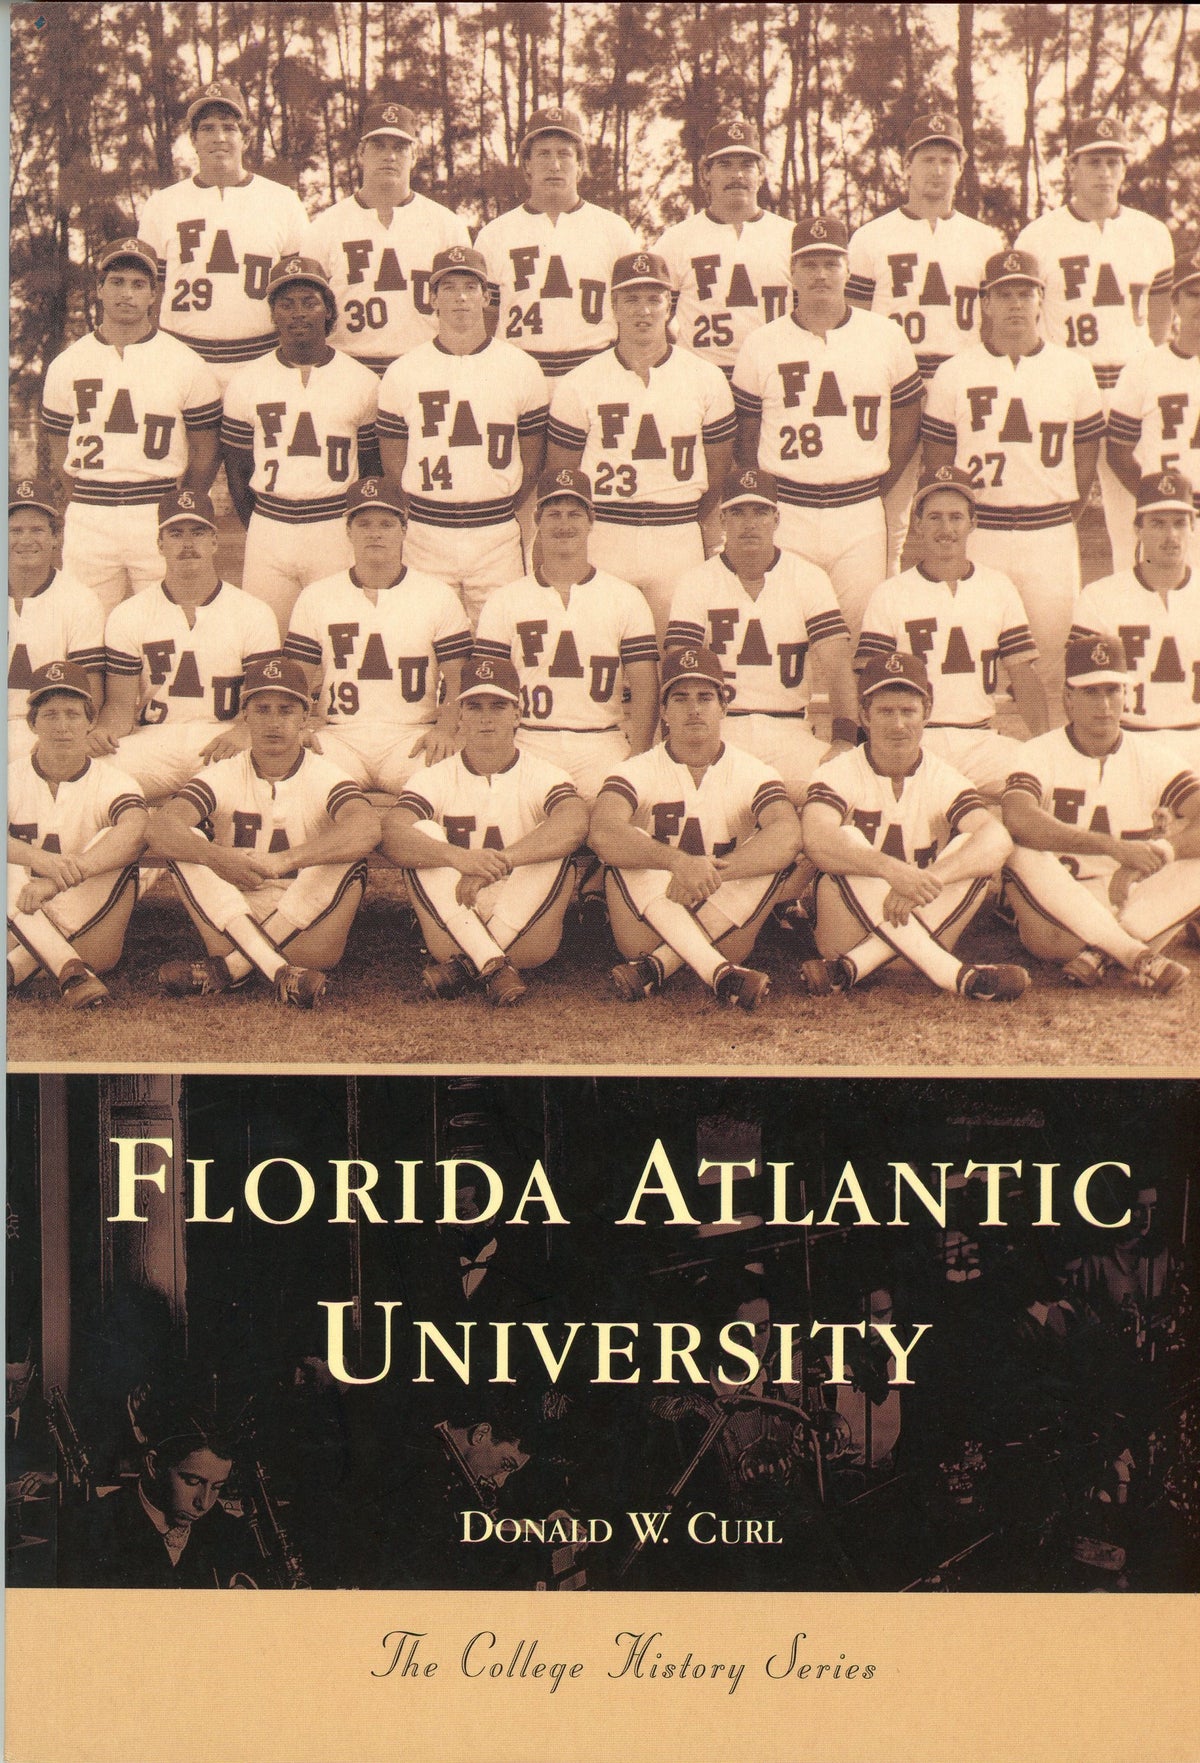 The College History Series: Florida Atlantic University